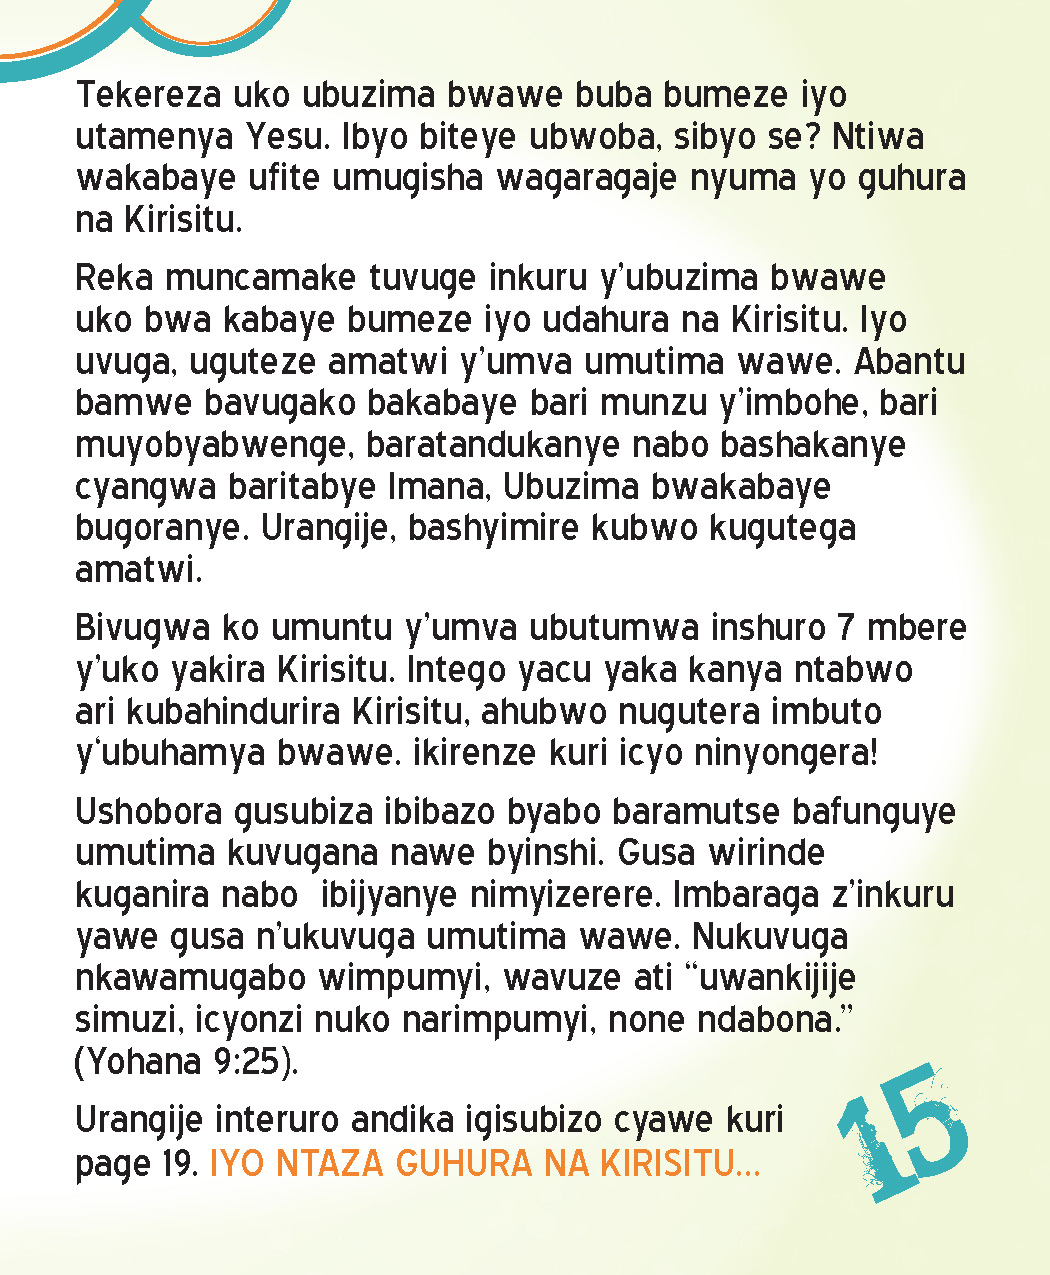 OMW_Kinyarwanda_Page-15.jpg